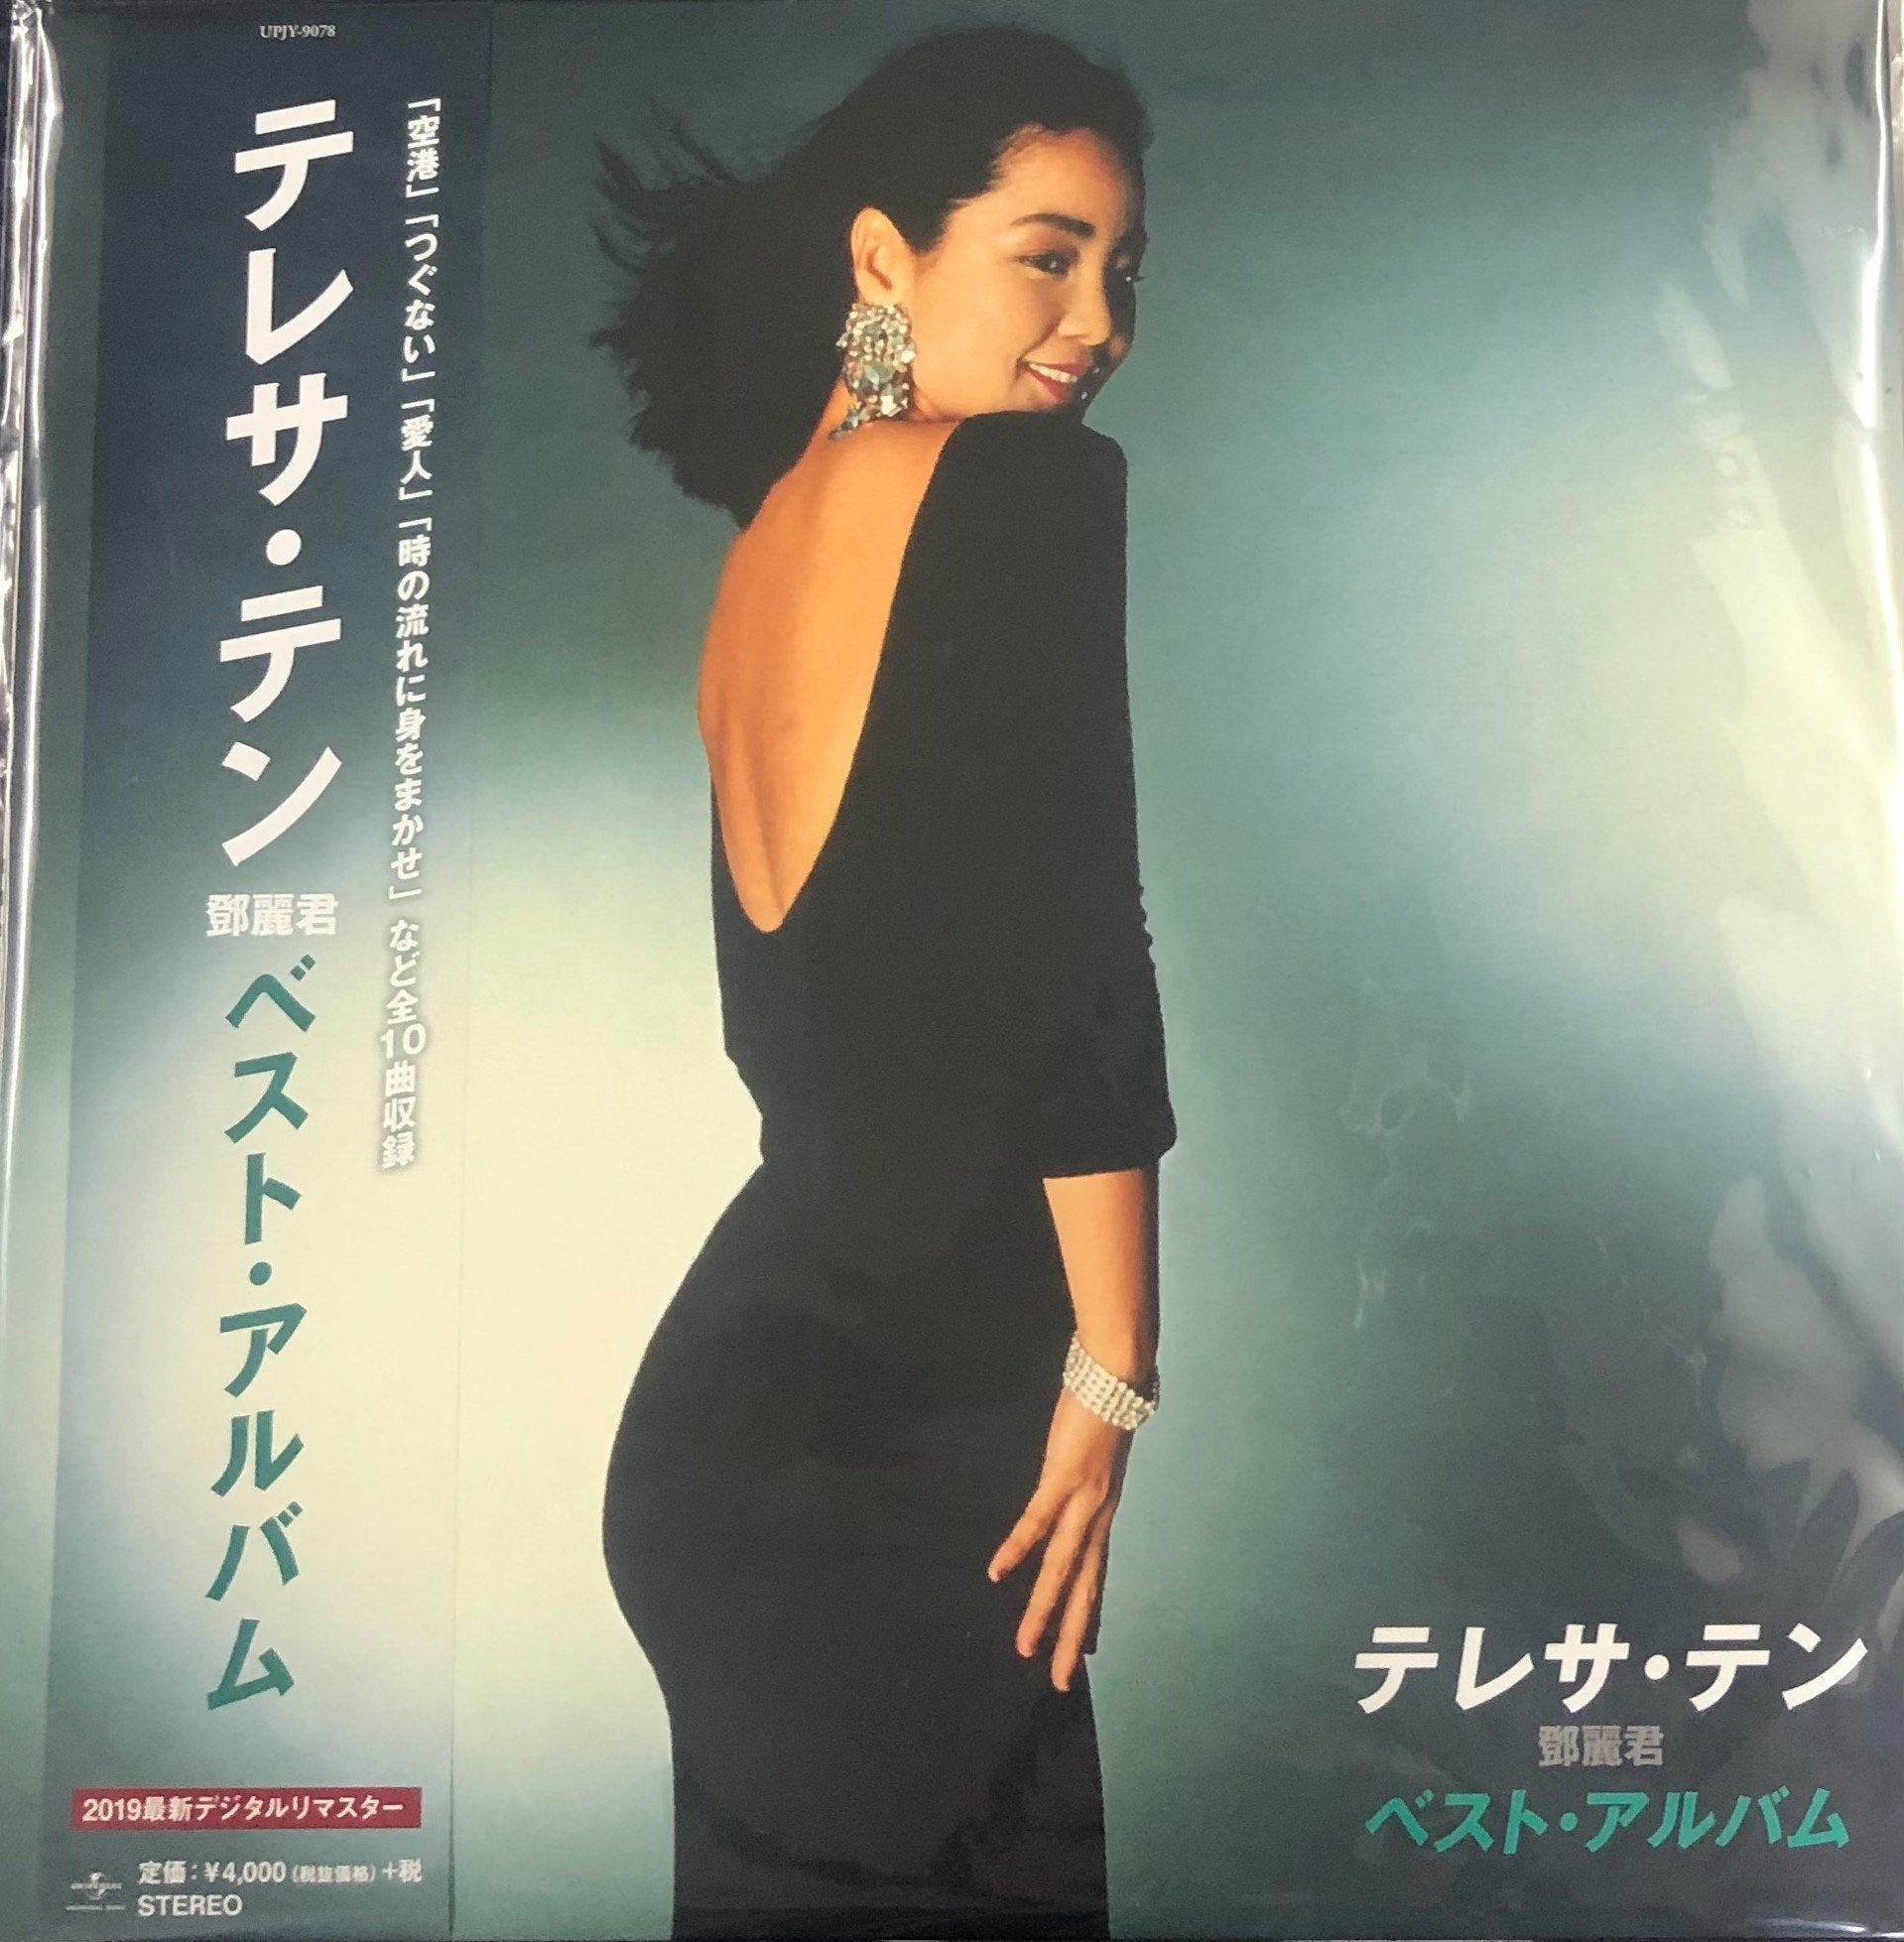 TERESA TENG - 鄧麗君 BEST ALBUM  (JAPAN IMPORT) VINYL